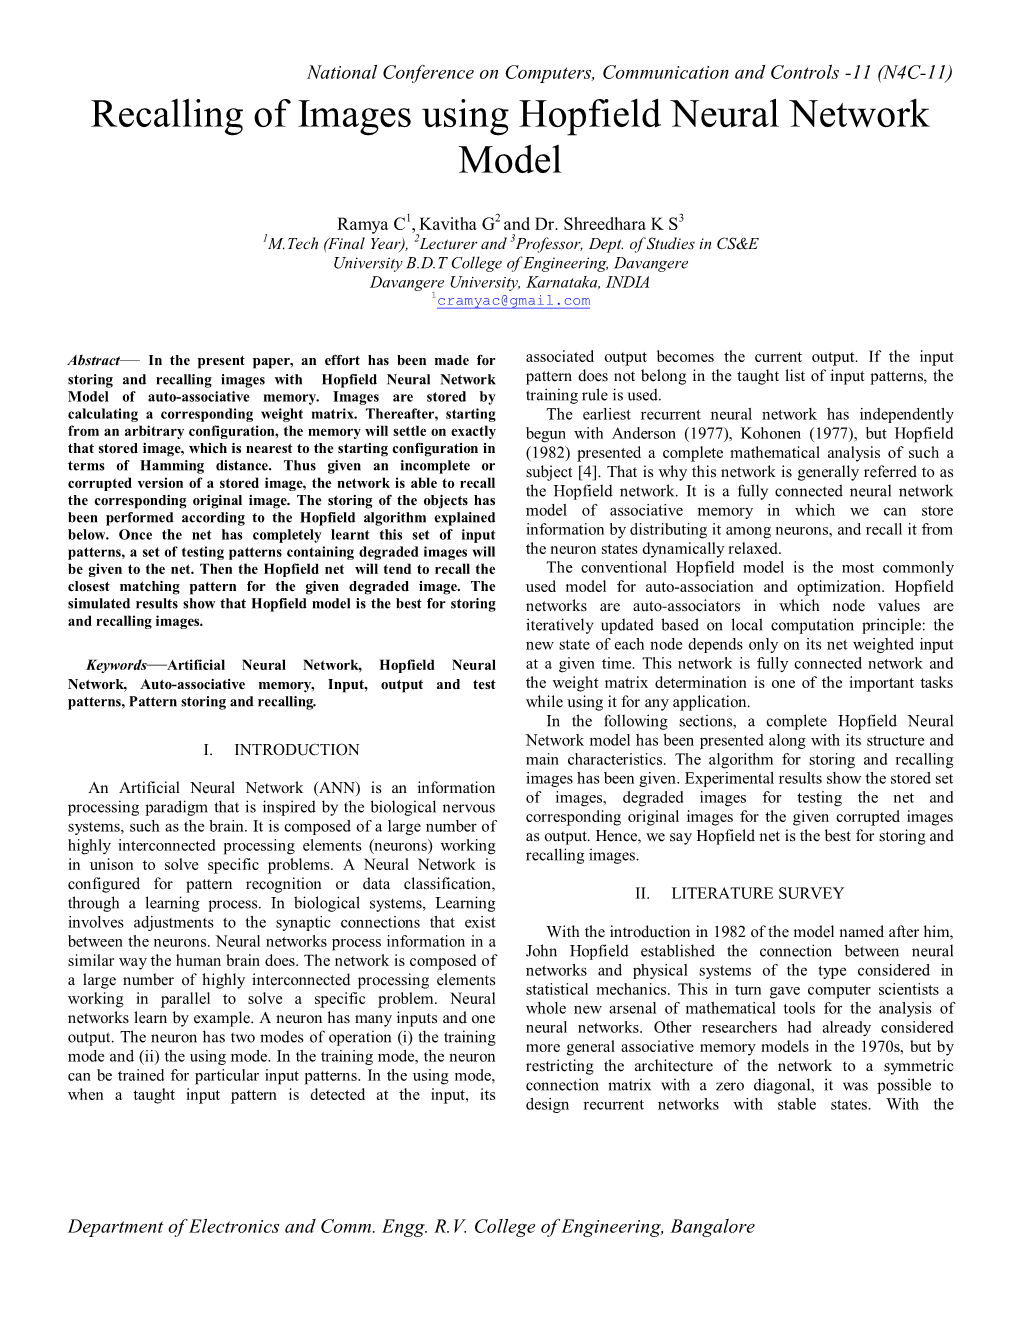 Recalling of Images Using Hopfield Neural Network Model